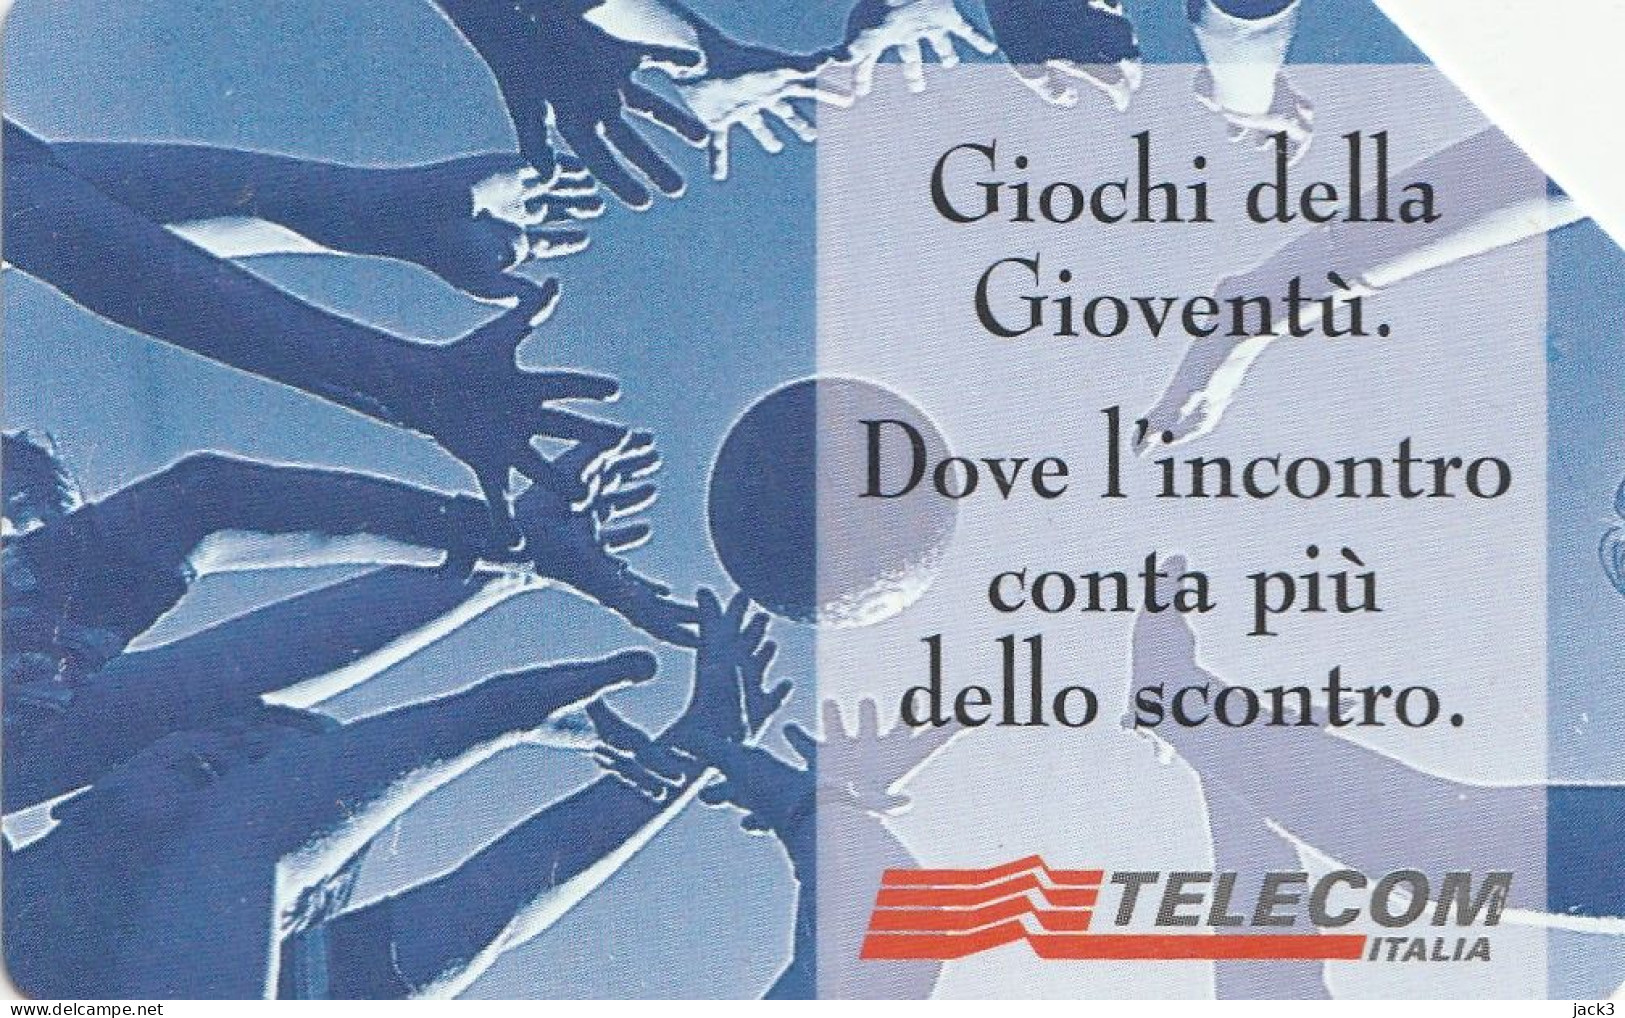 SCEDA TELEFONICA - GIOCHI DELLA GIOVENTU' 1997 (2 SCANS) - Publiques Thématiques